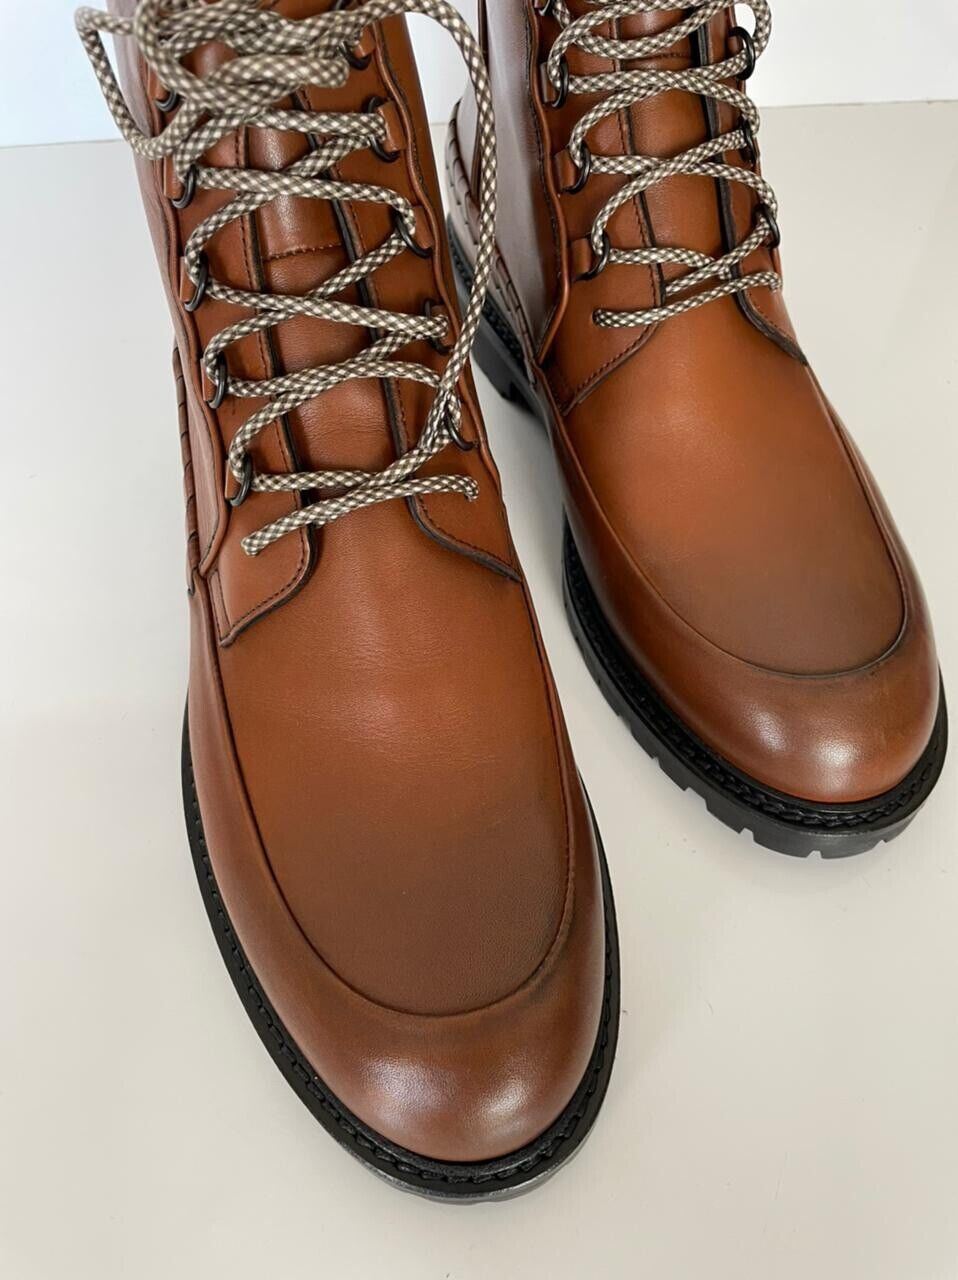 NIB $1200 Bottega Veneta Calf Leather Brown Ankle Boots 11 US (44 Euro) 548145